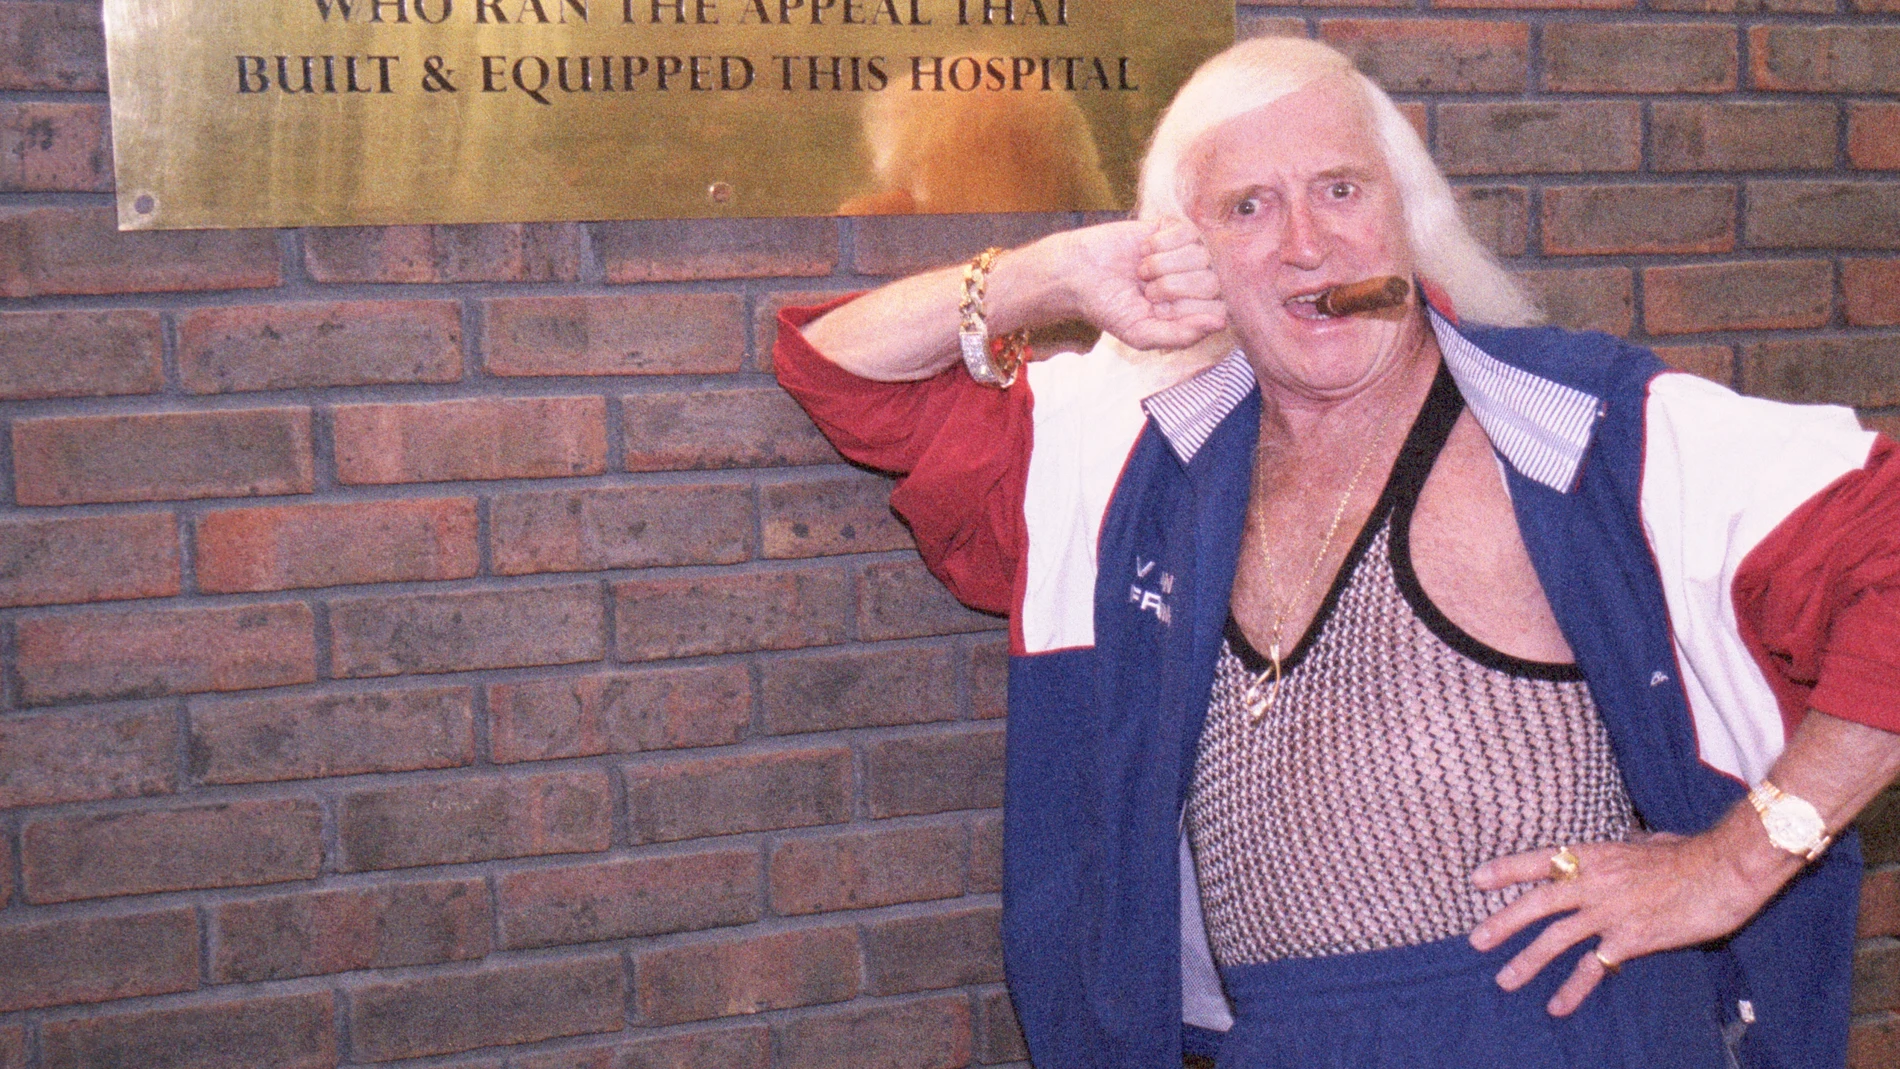 ADDA2B Sir Jimmy Savile at Stoke Mandeville Hospital in Sep 2003. Image shot 09/2003. Exact date unknown.